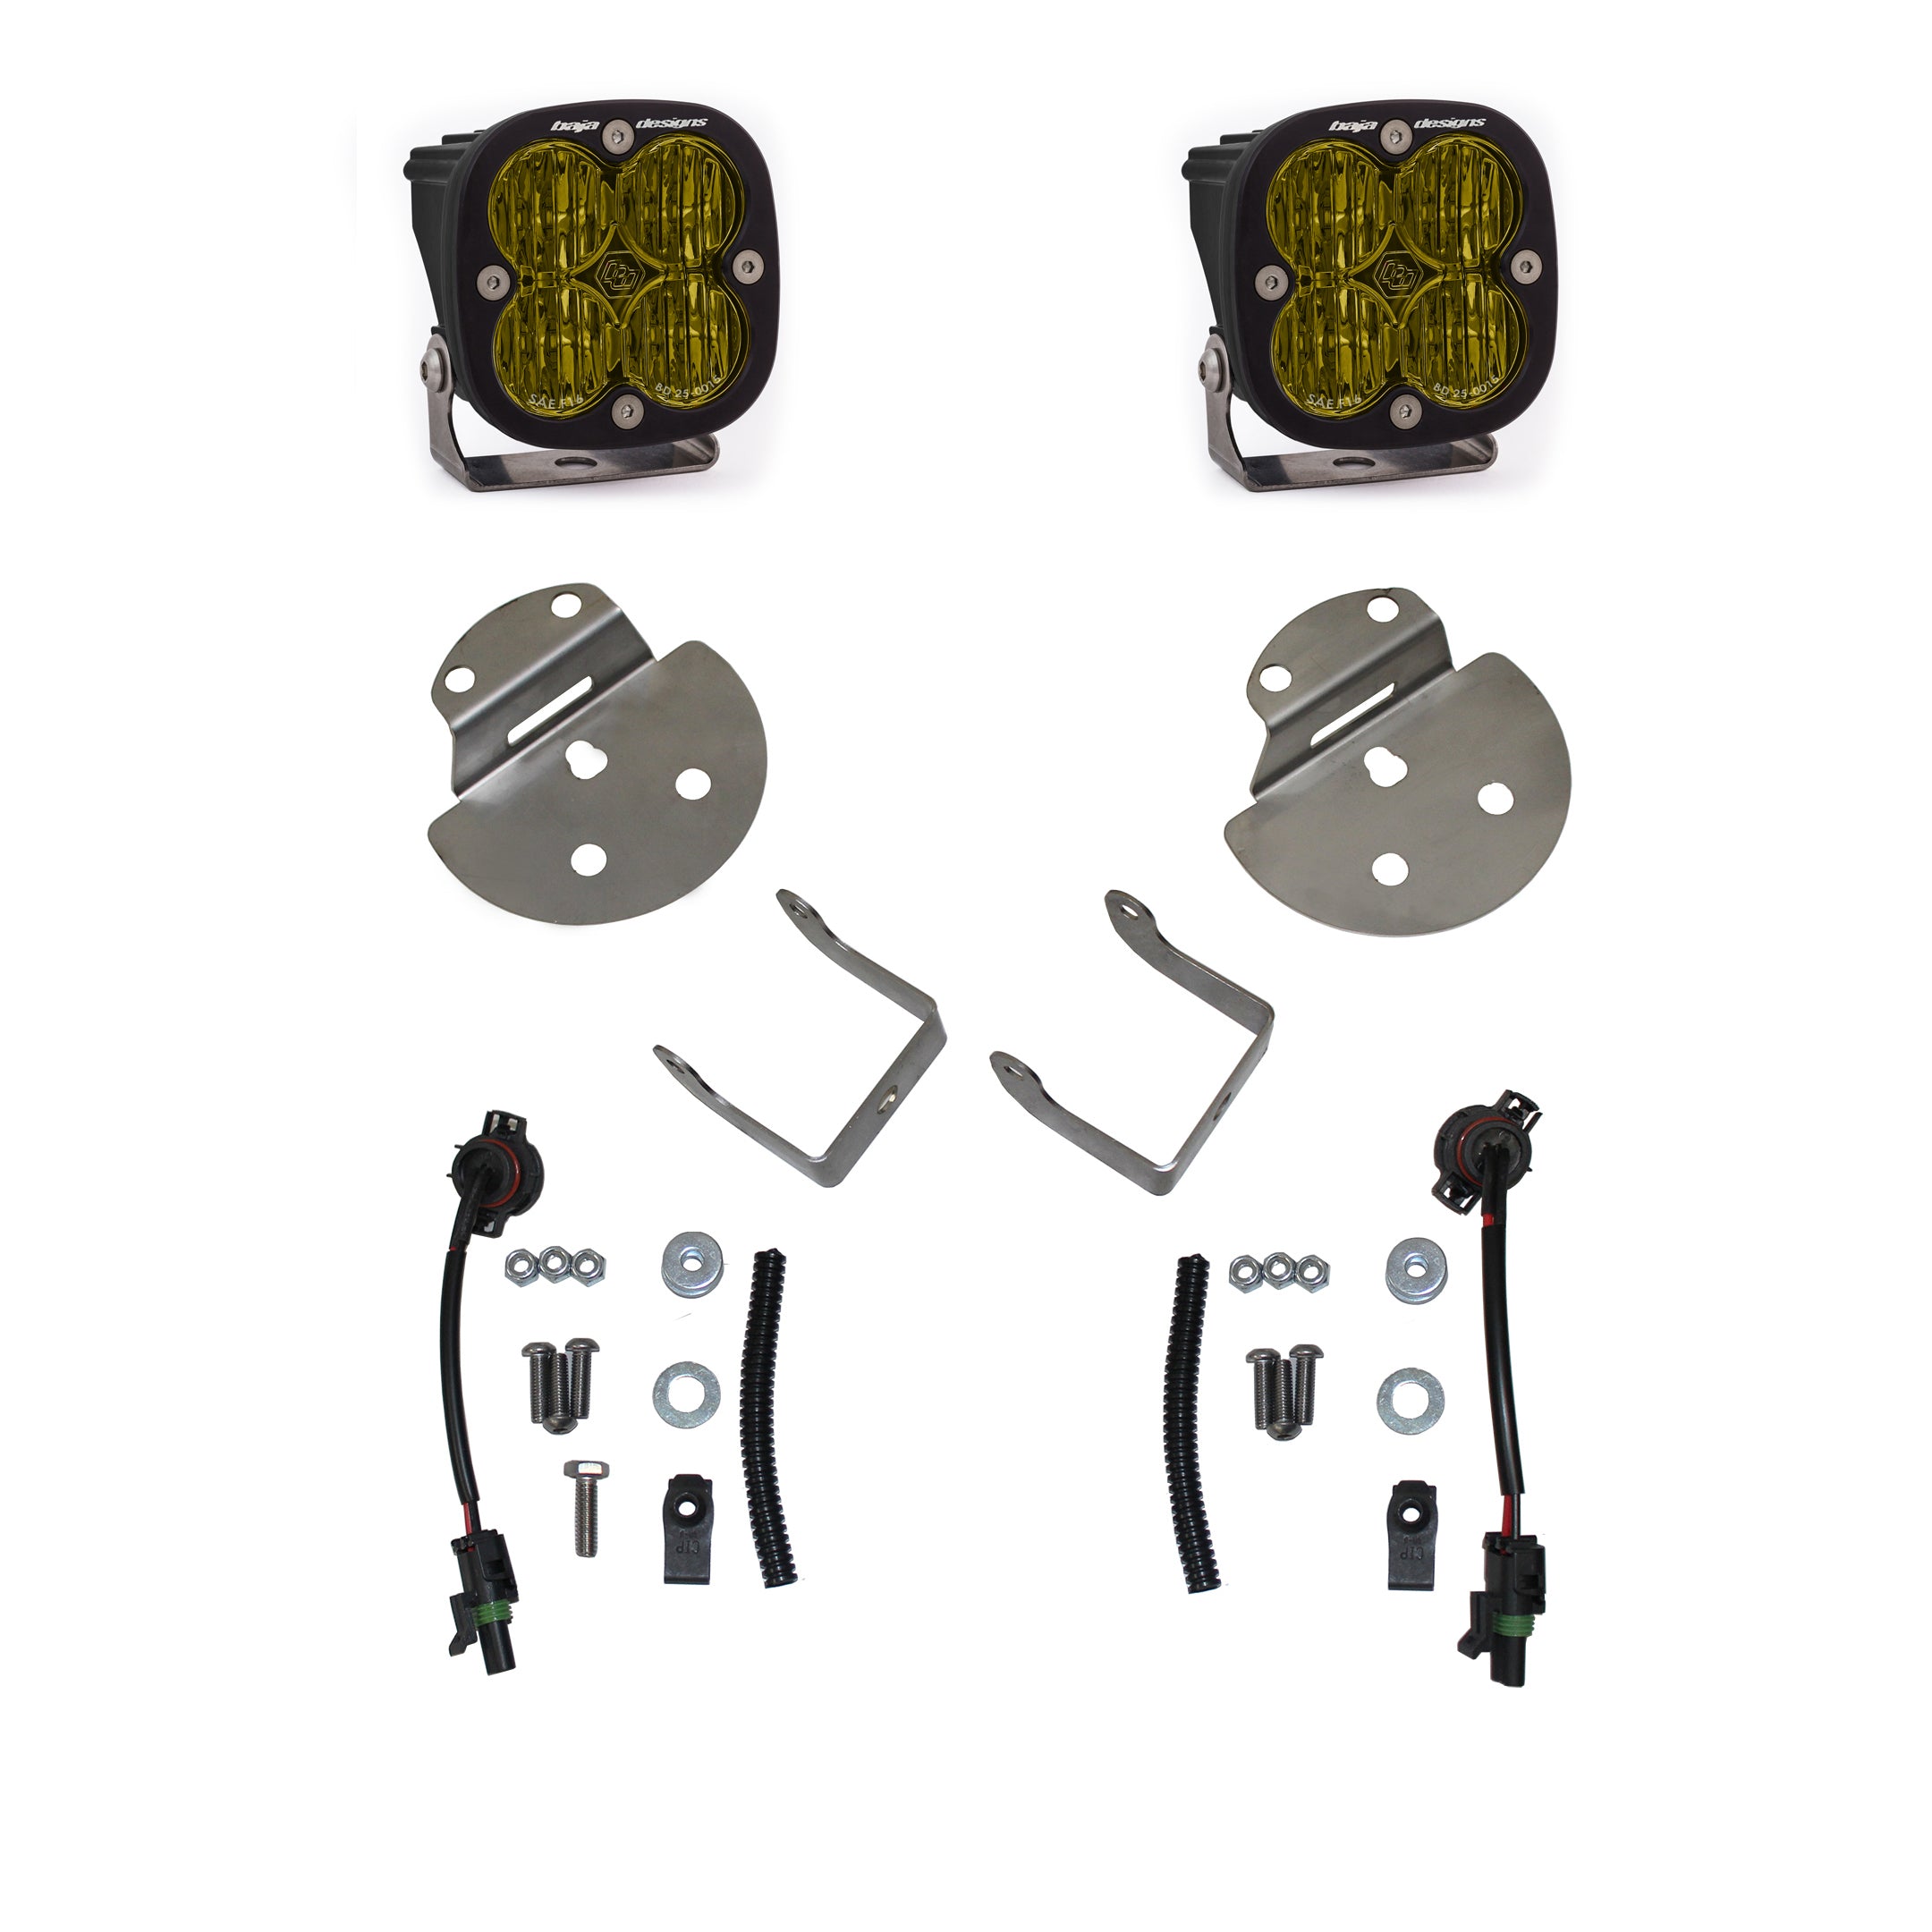 Baja Designs Squadron SAE LED Light Kit - Fits Chevy/GMC 15-19 Canyon, Colorado, Sierra/Silverado 2500/3500 (Set)